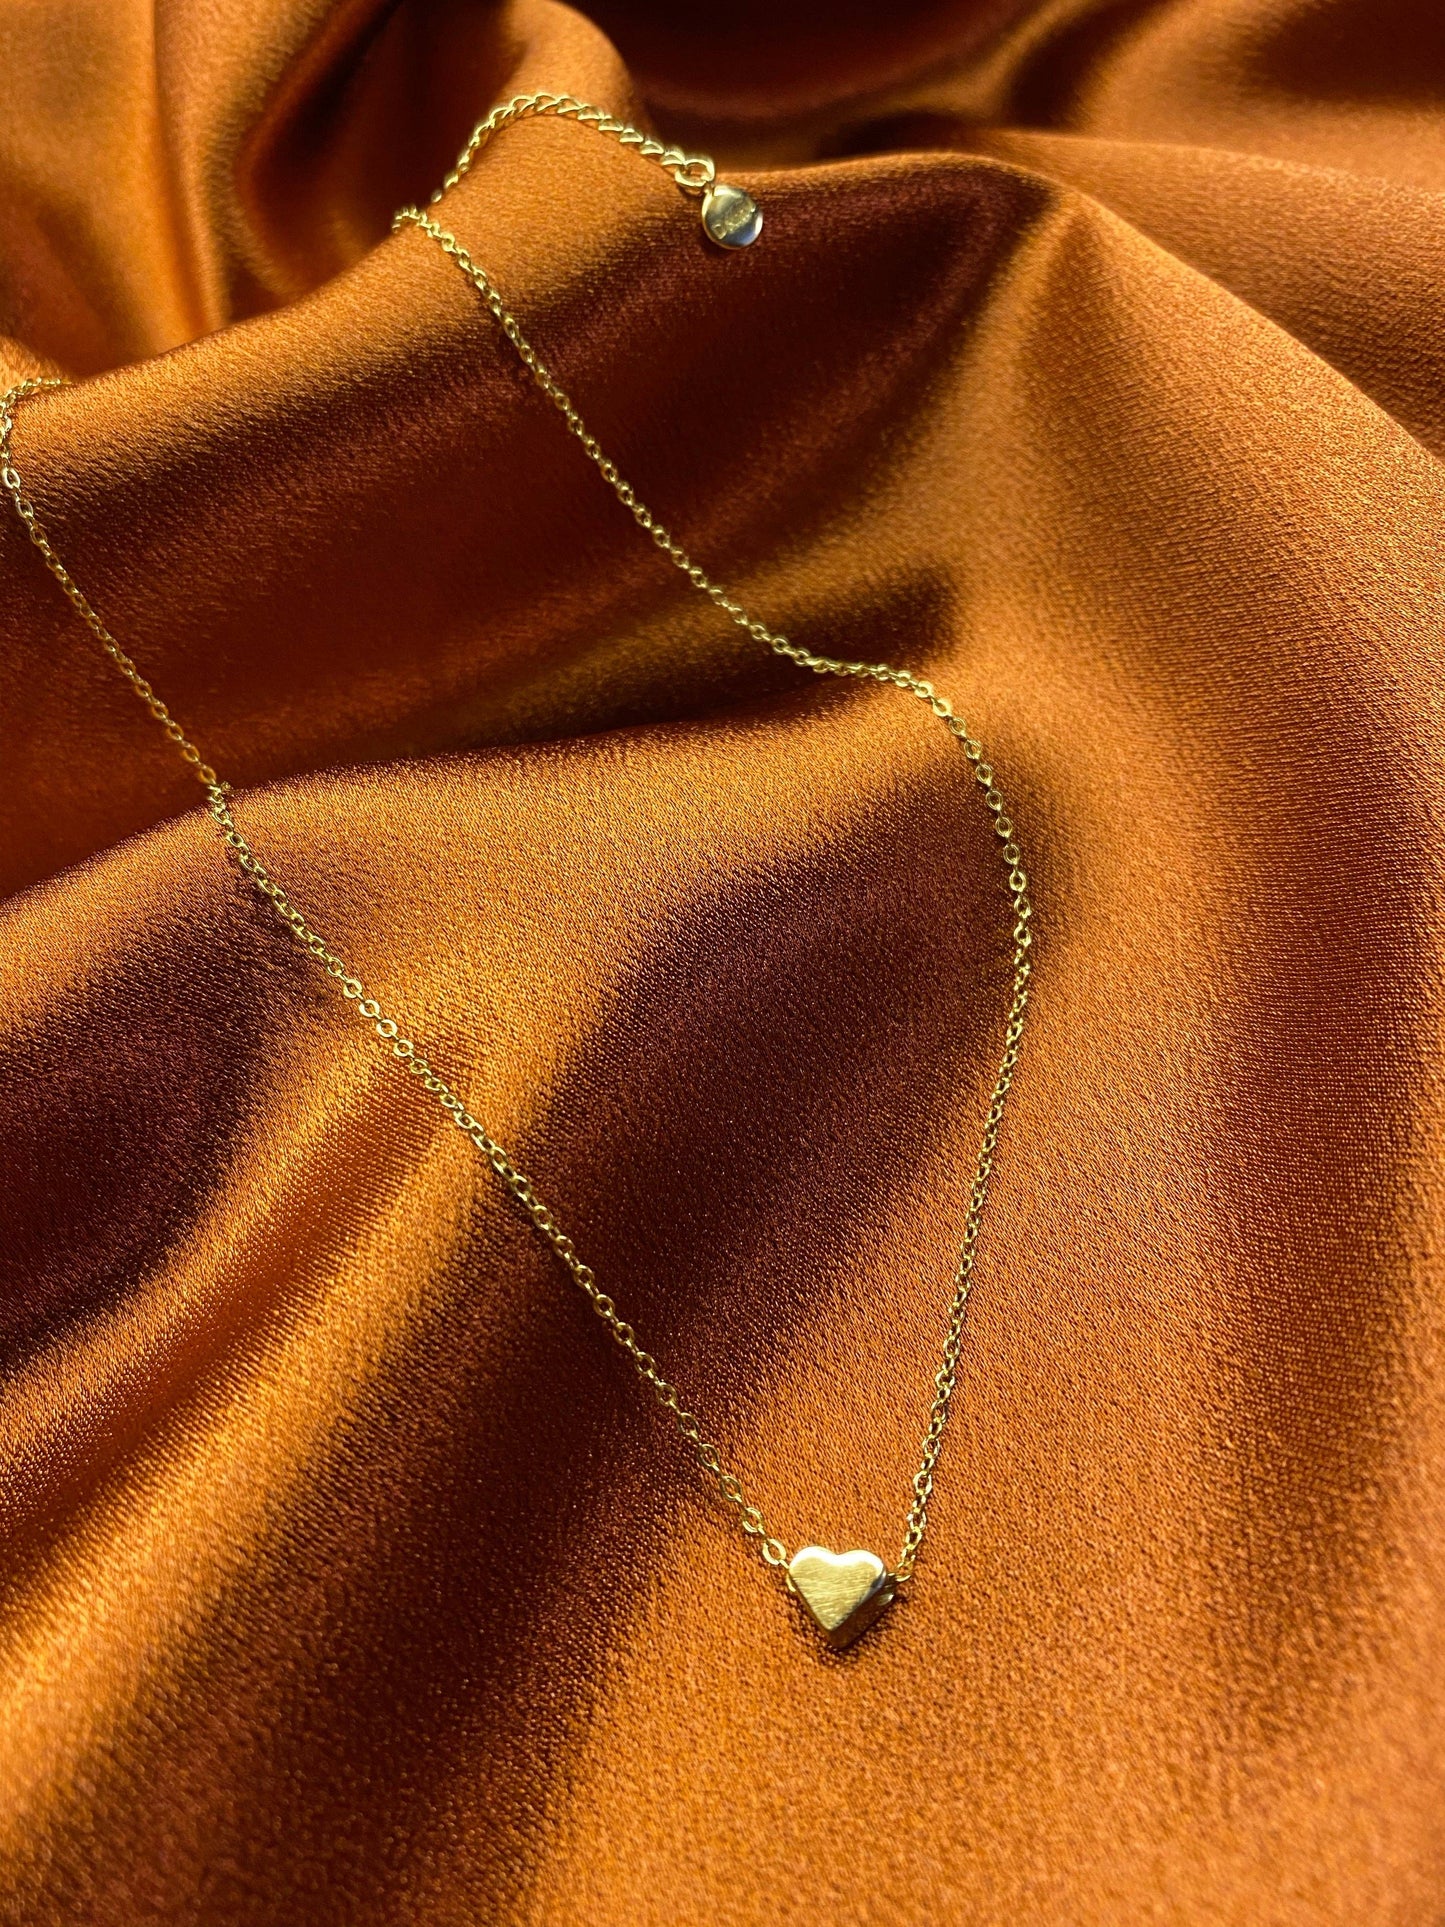 A Lil' Bit Of Love Necklace